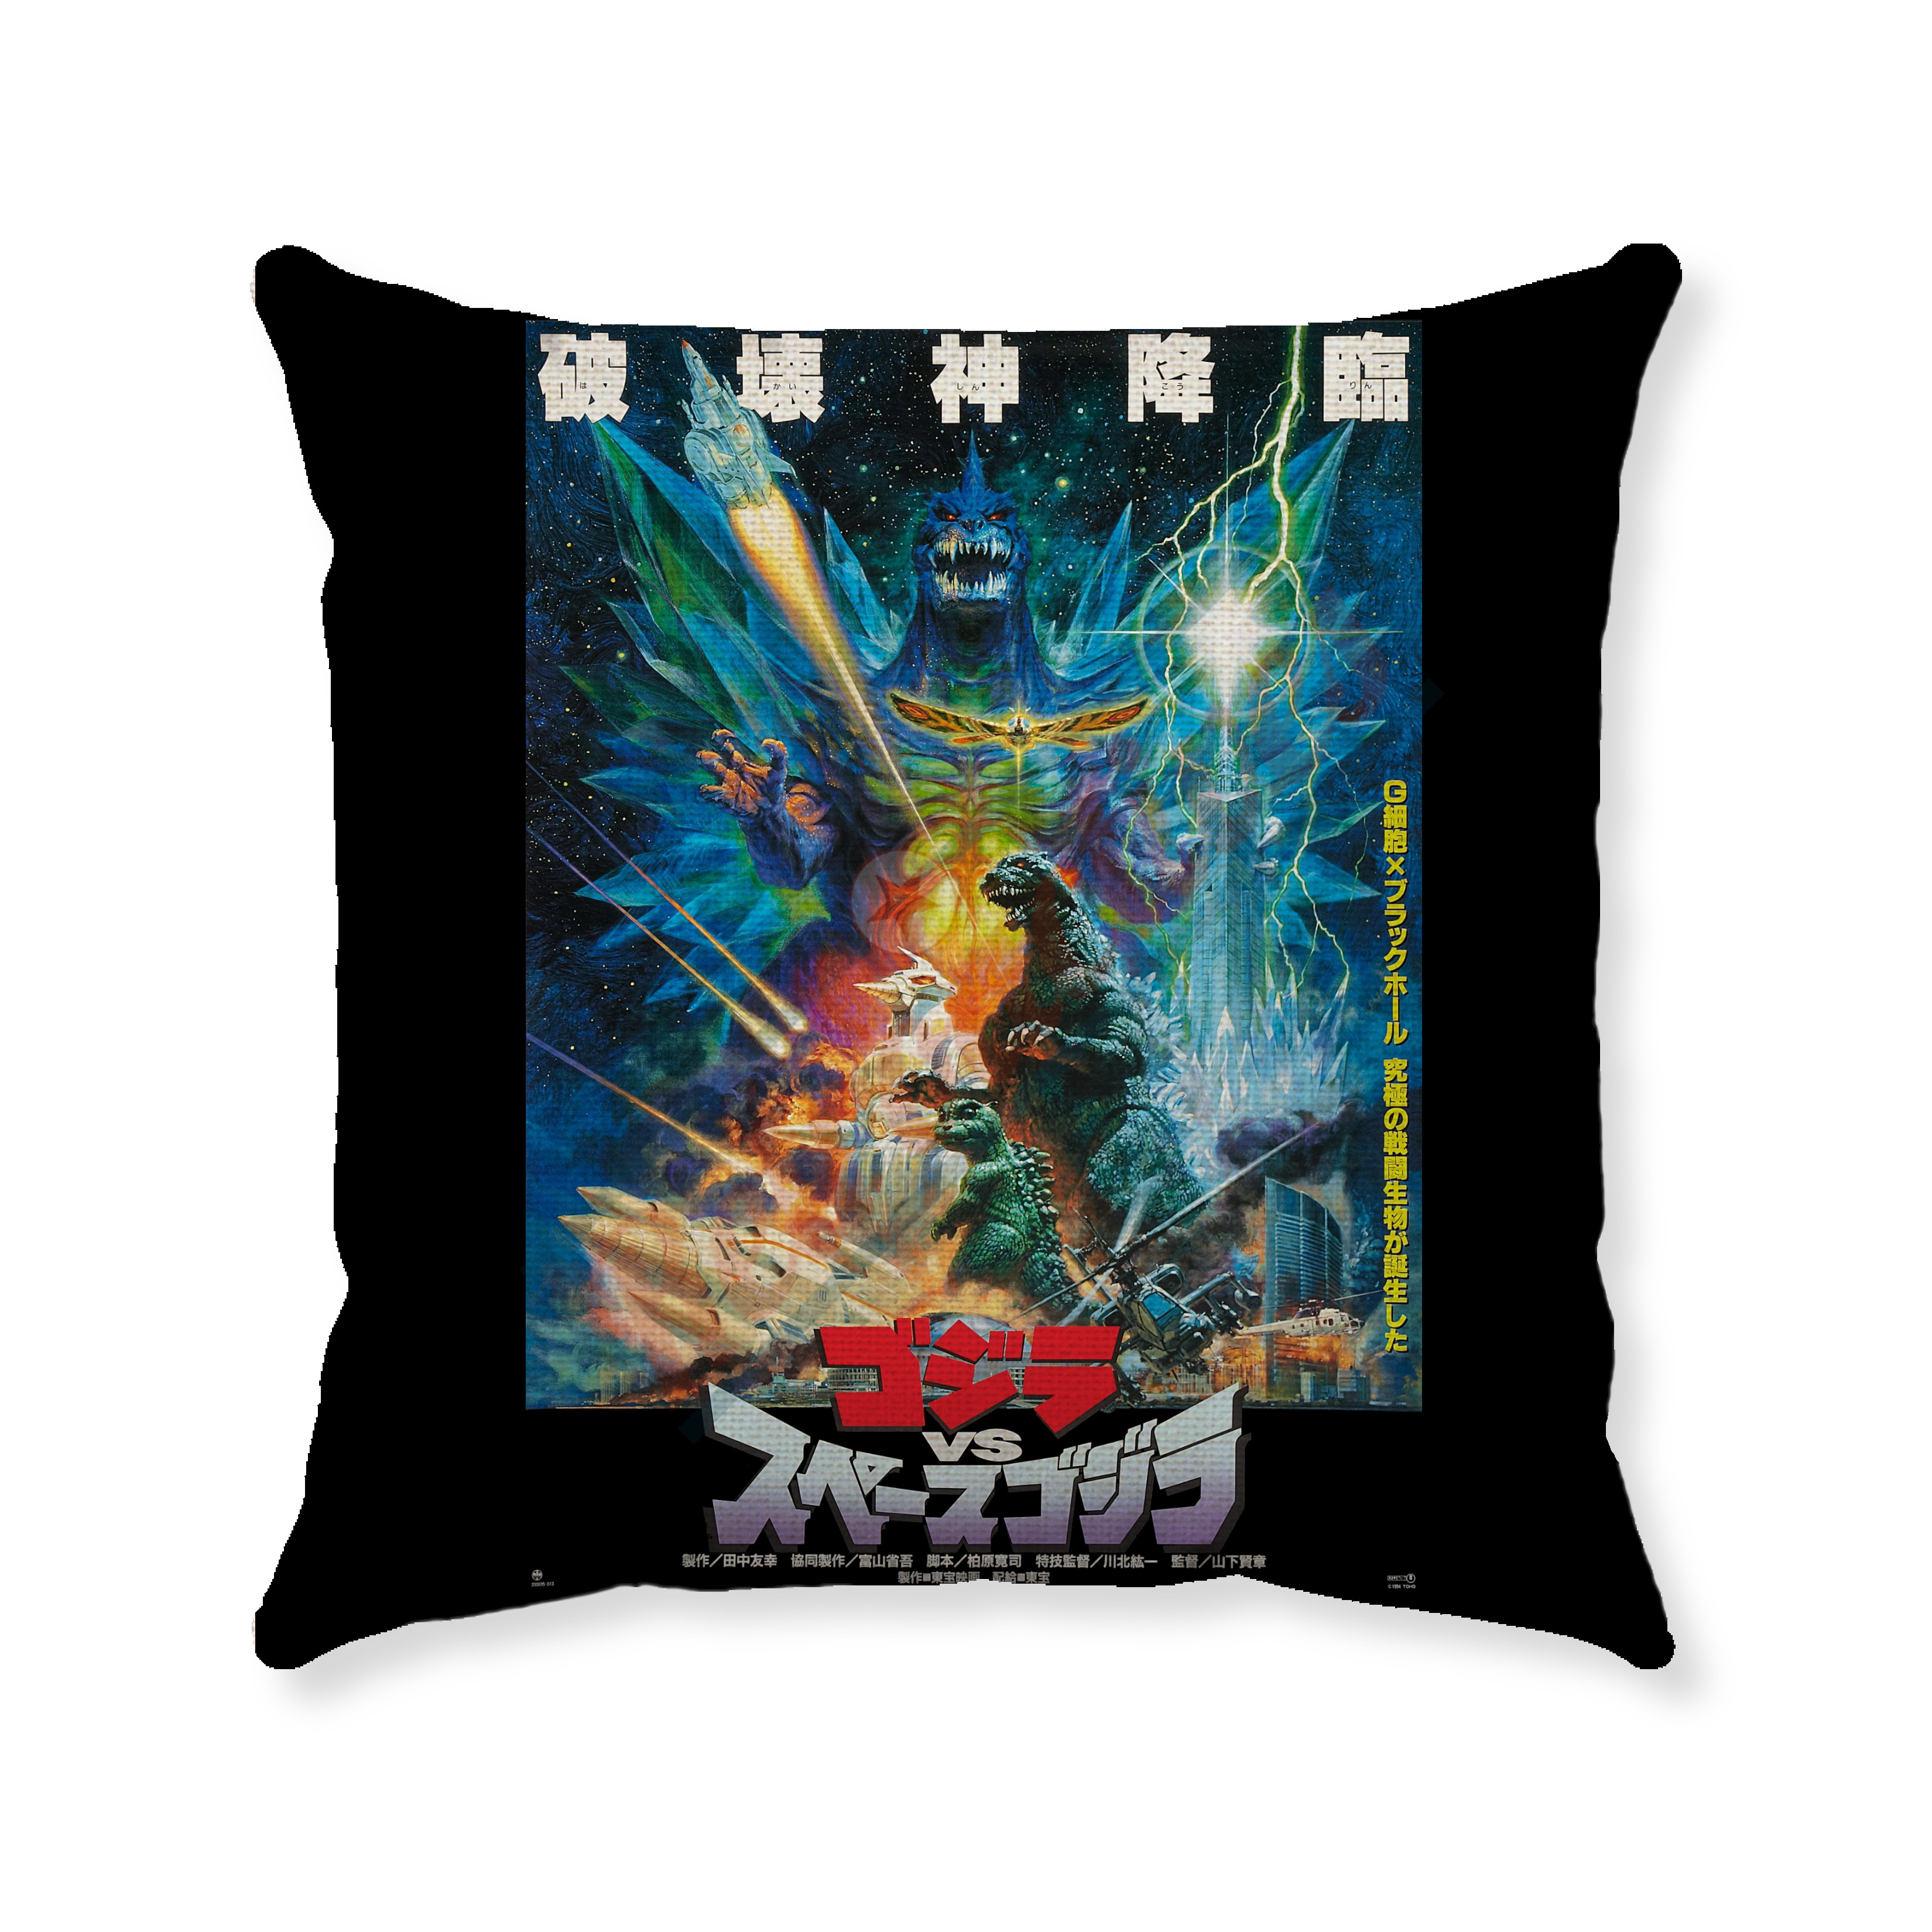 1994 Godzilla vs Space Godzilla - Handmade Decorative Throw Pillow